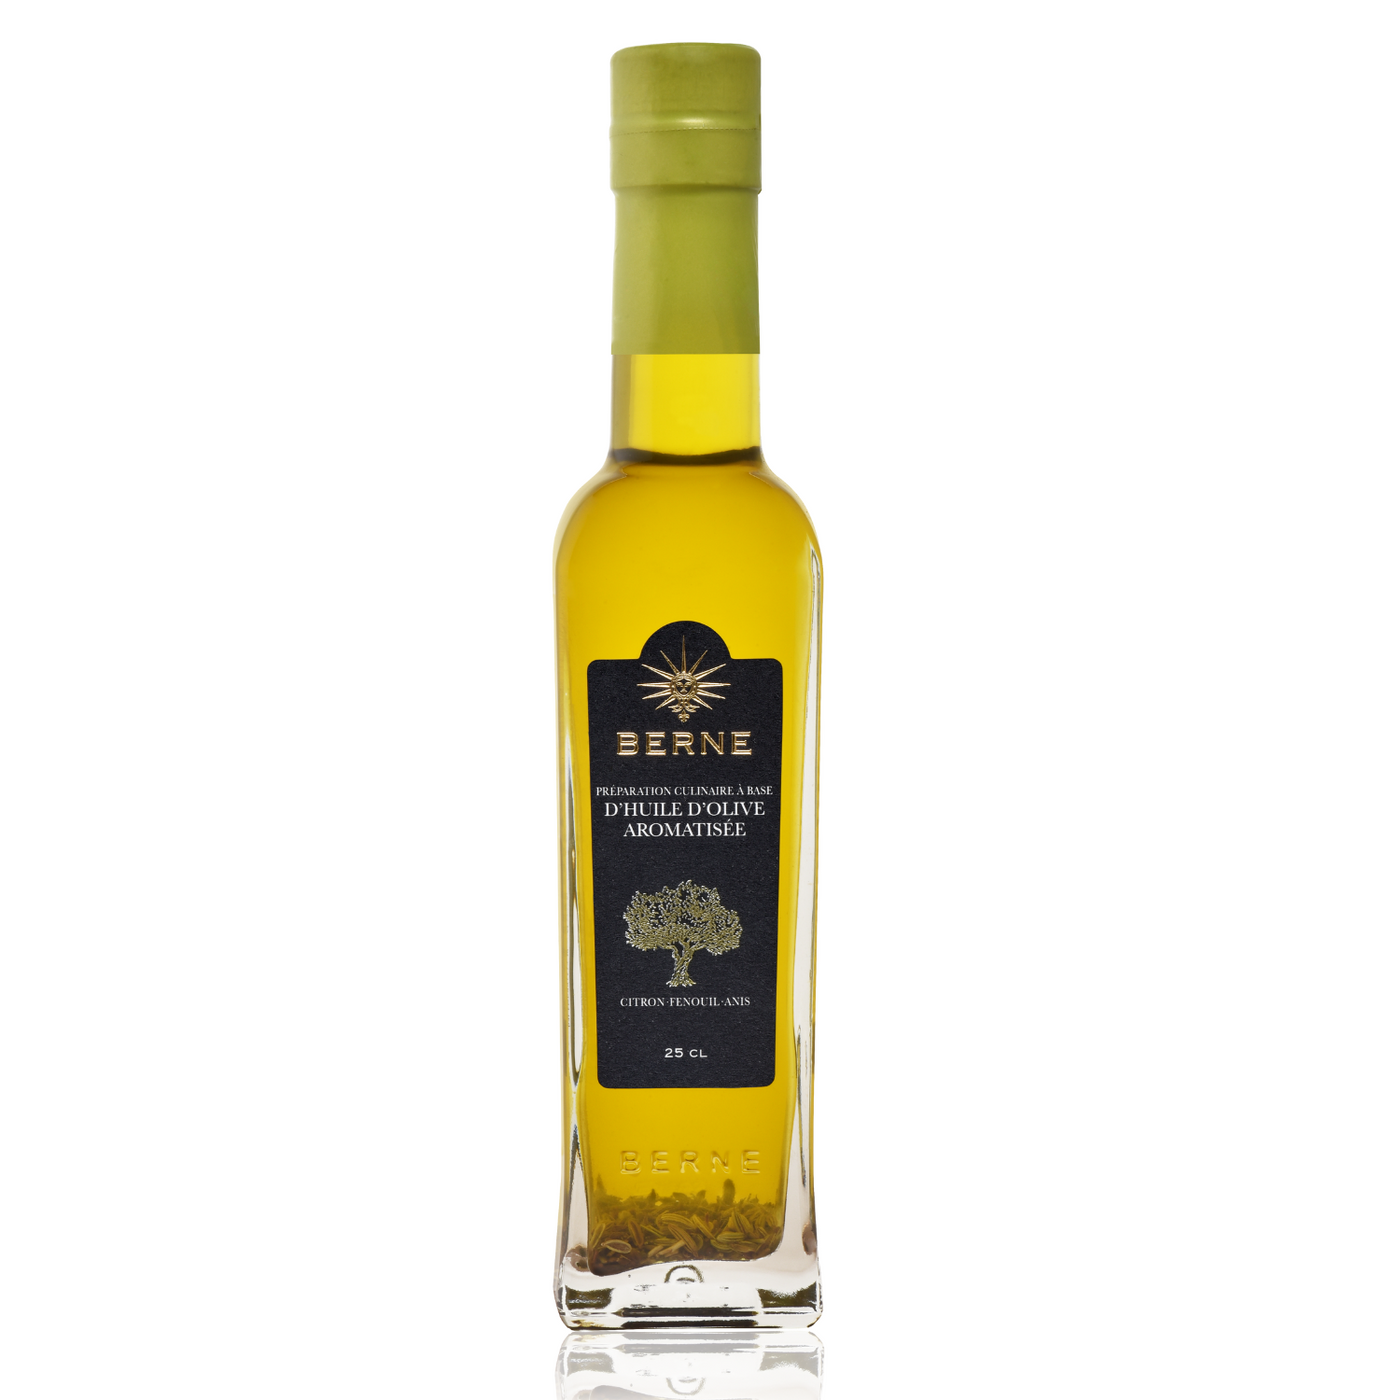 Berne - Huile d'Olive aromatisée Citron, Fenouil & Anis